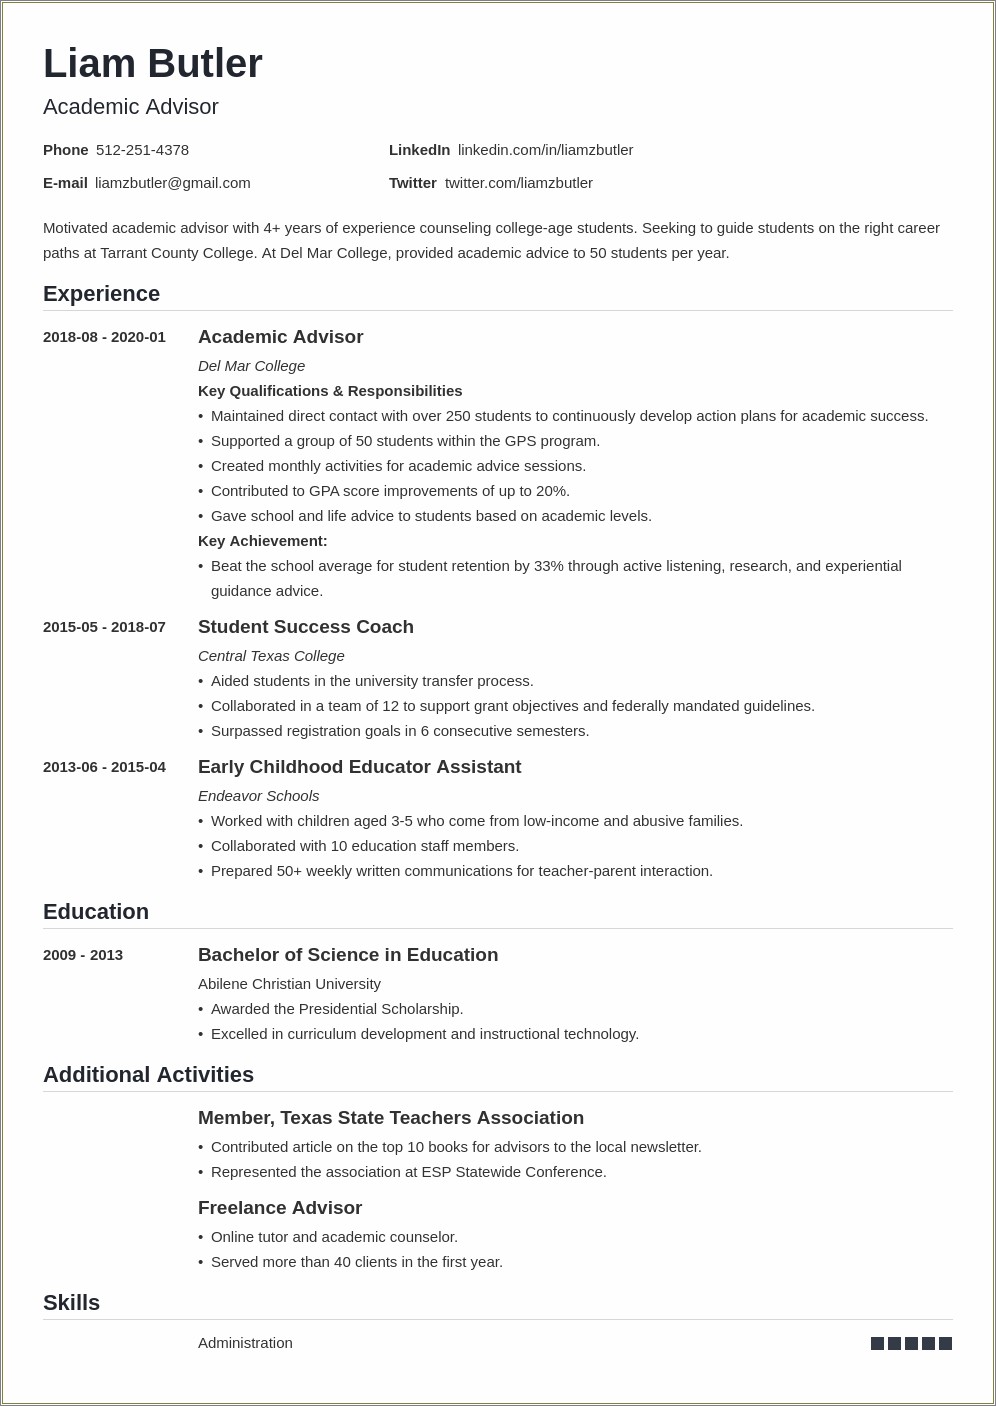 Resume Objective Examples For Academic Advisor